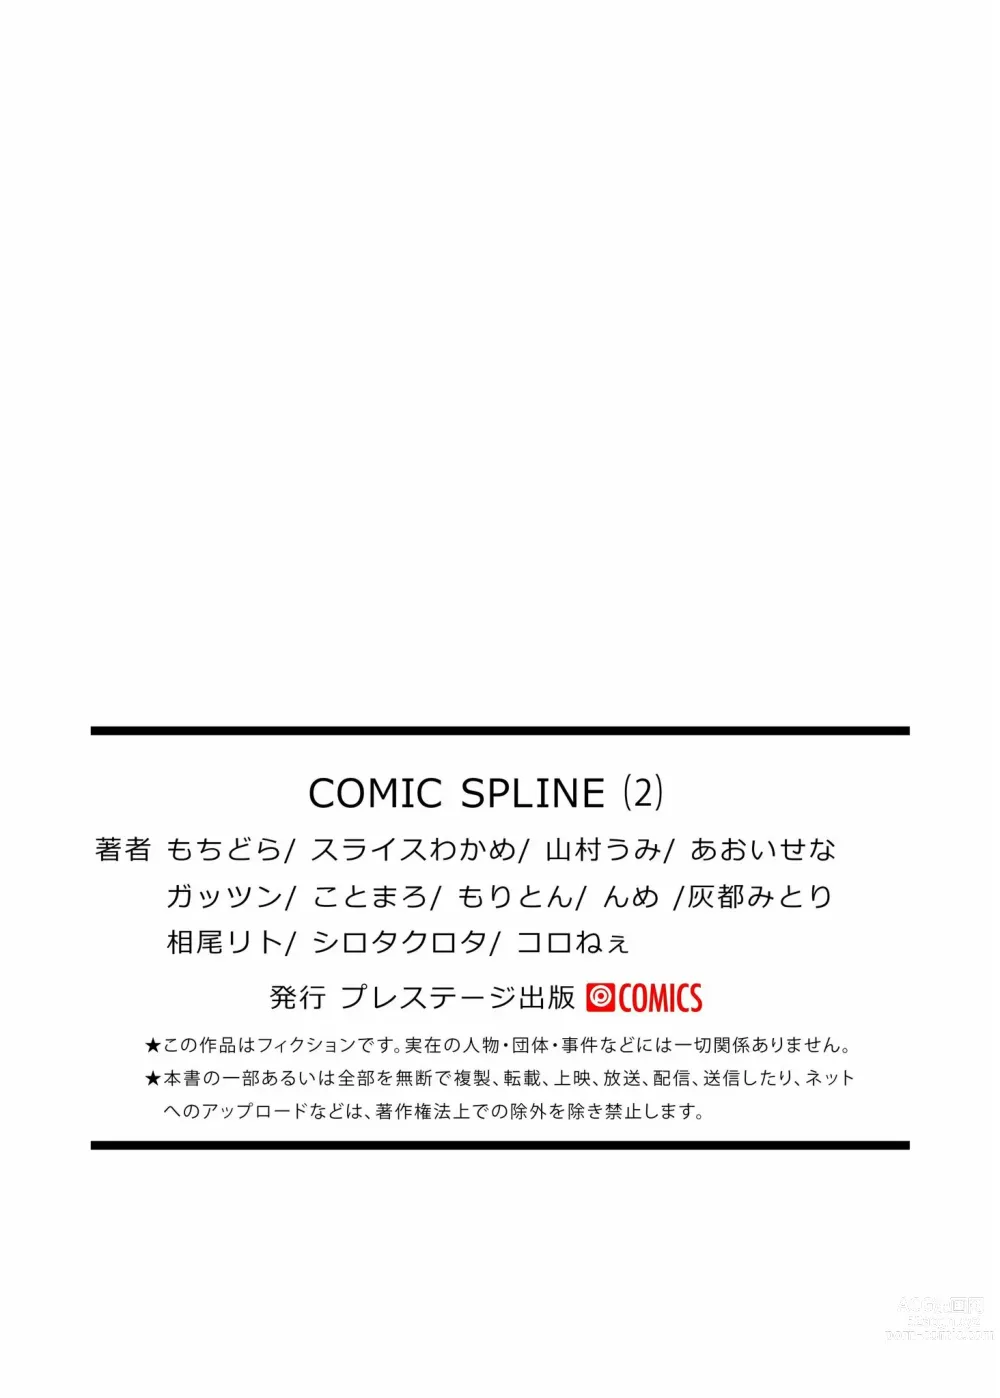 Page 441 of manga COMIC SPLINE Vol.2